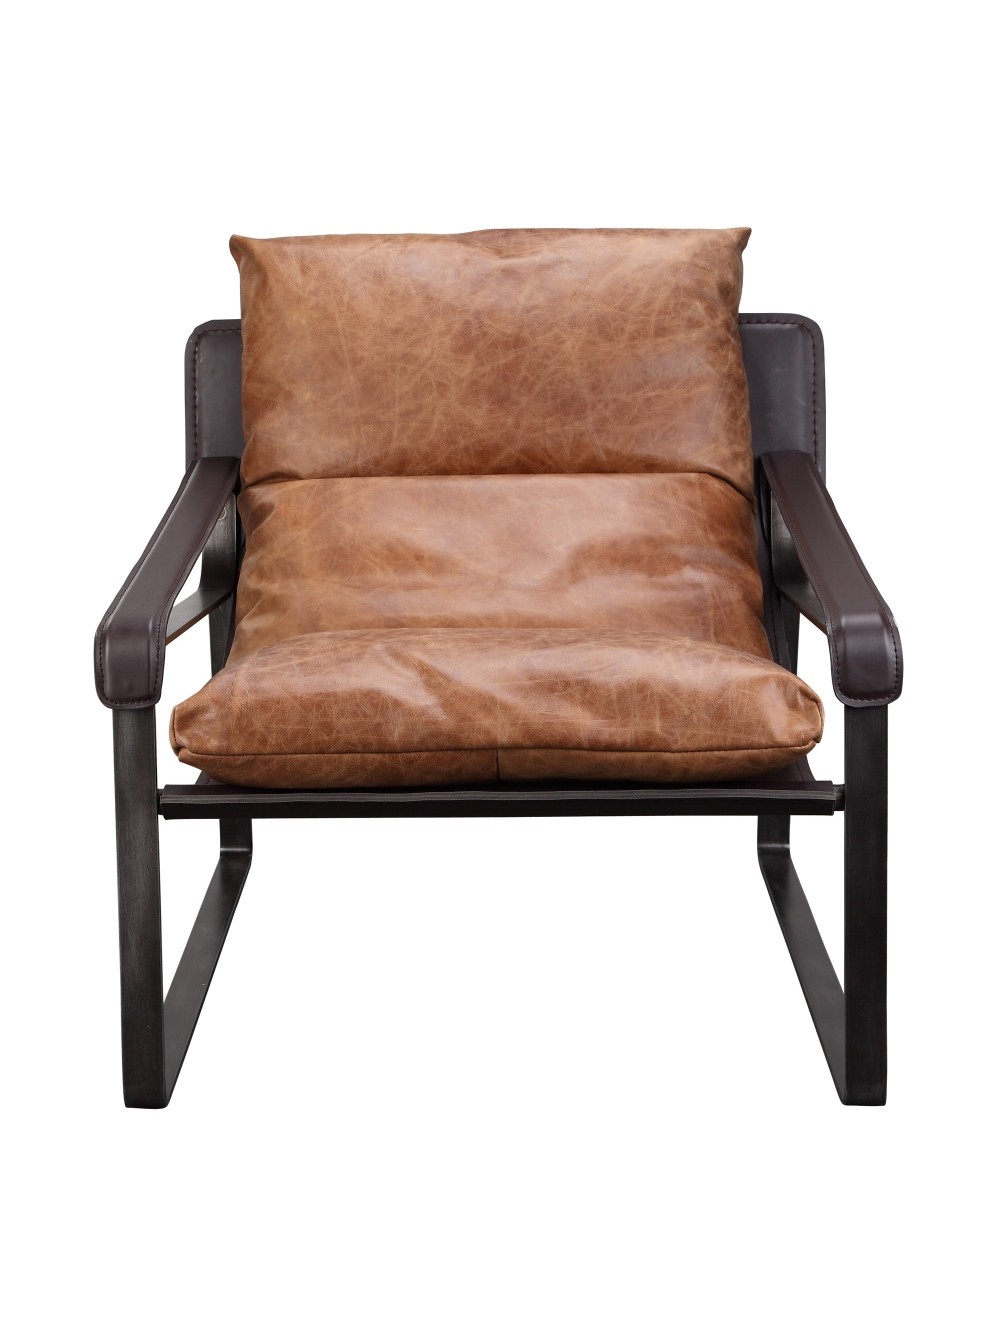 Chathan Club Chair - Brown - Image 0